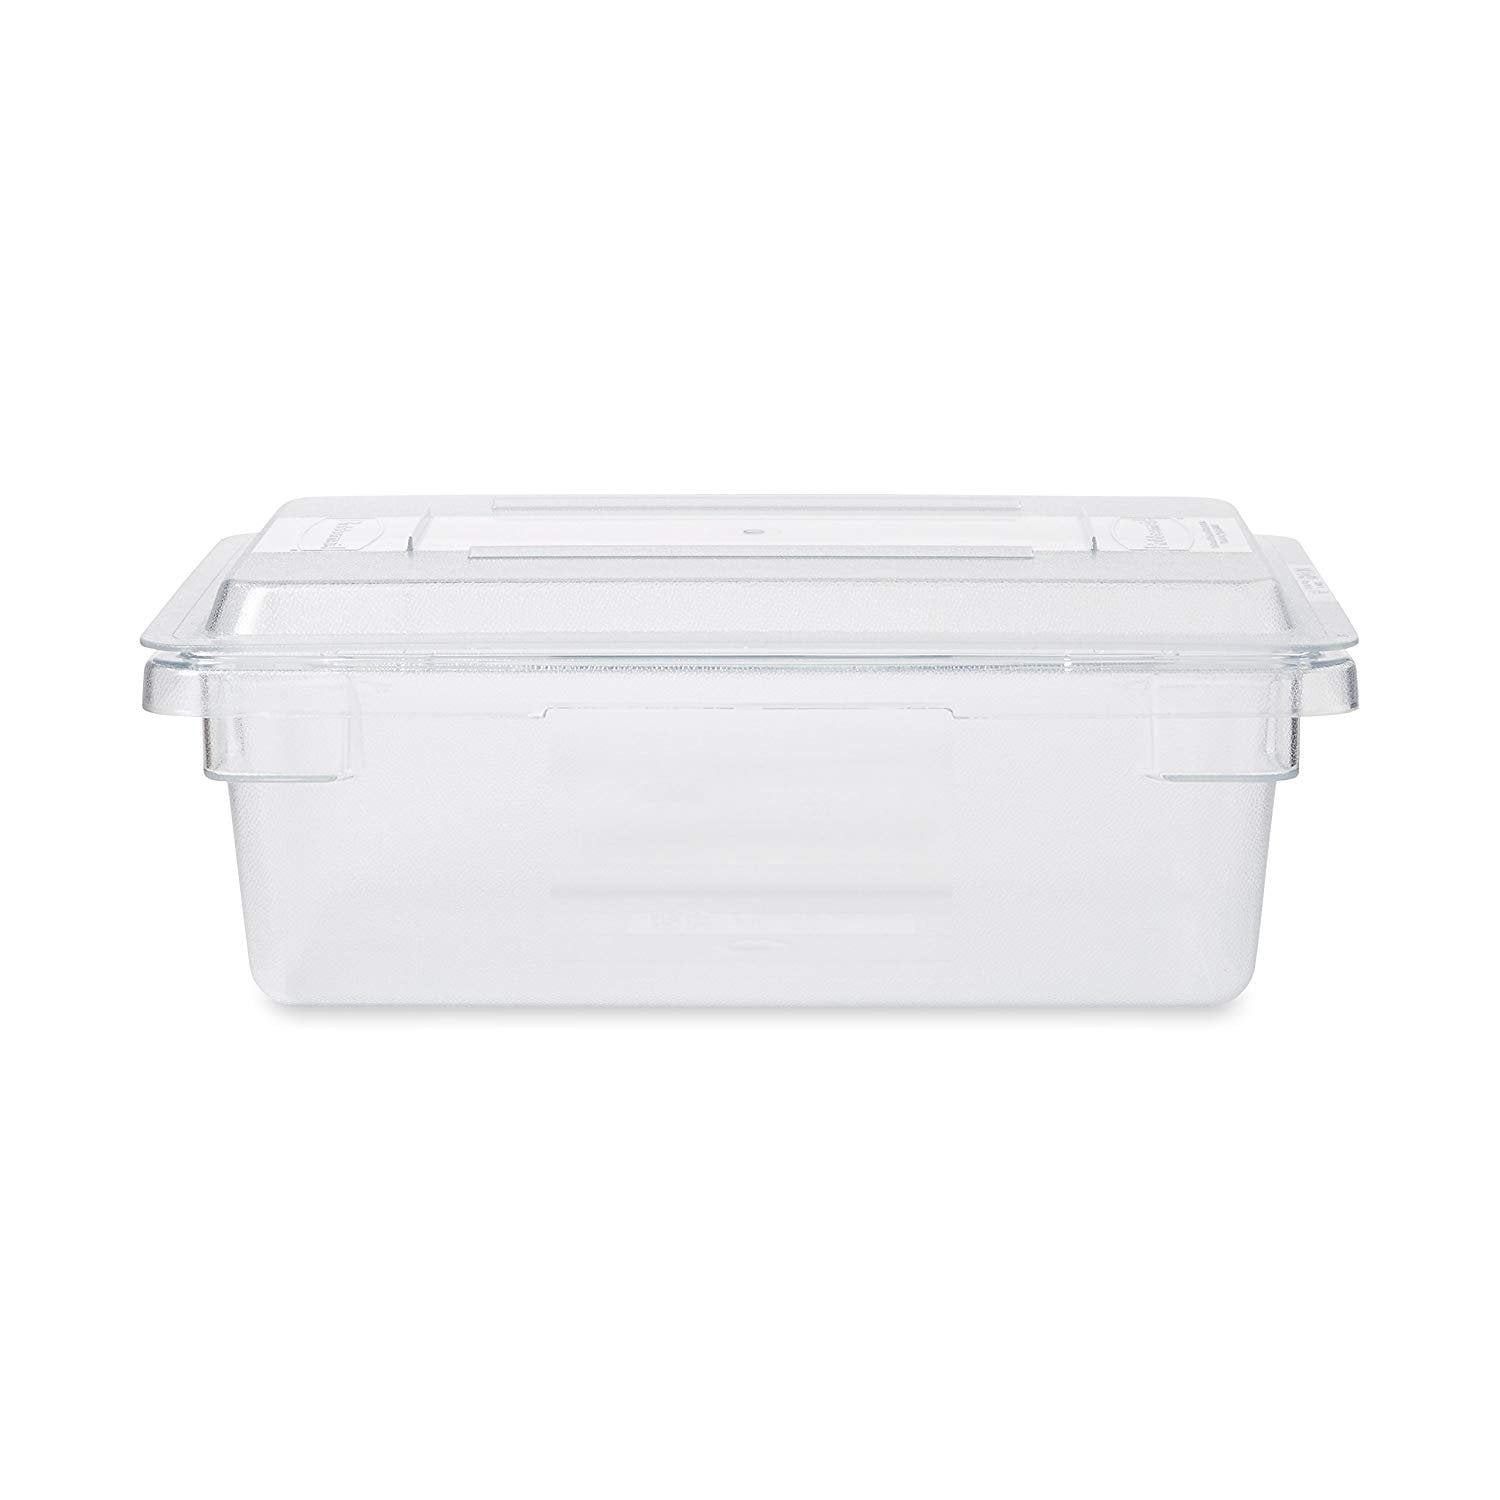 Rubbermaid FG352800WHT White Polyethylene Food Storage Box - 26 x